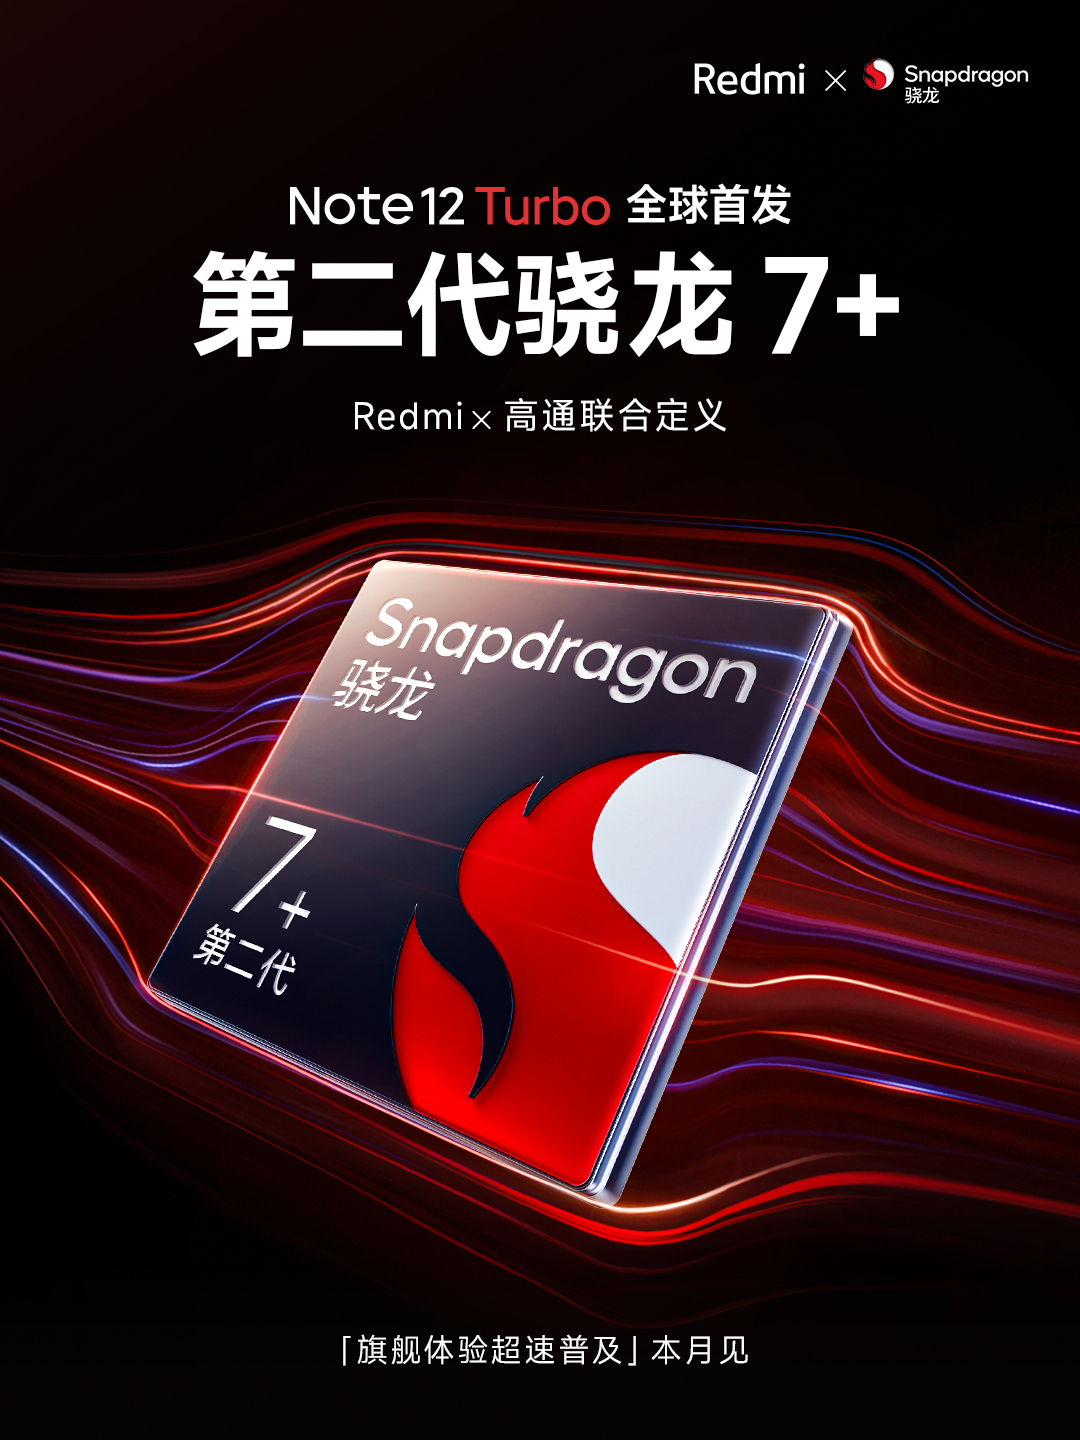 Redmi Note 12 Turbo Snapdragon 7+